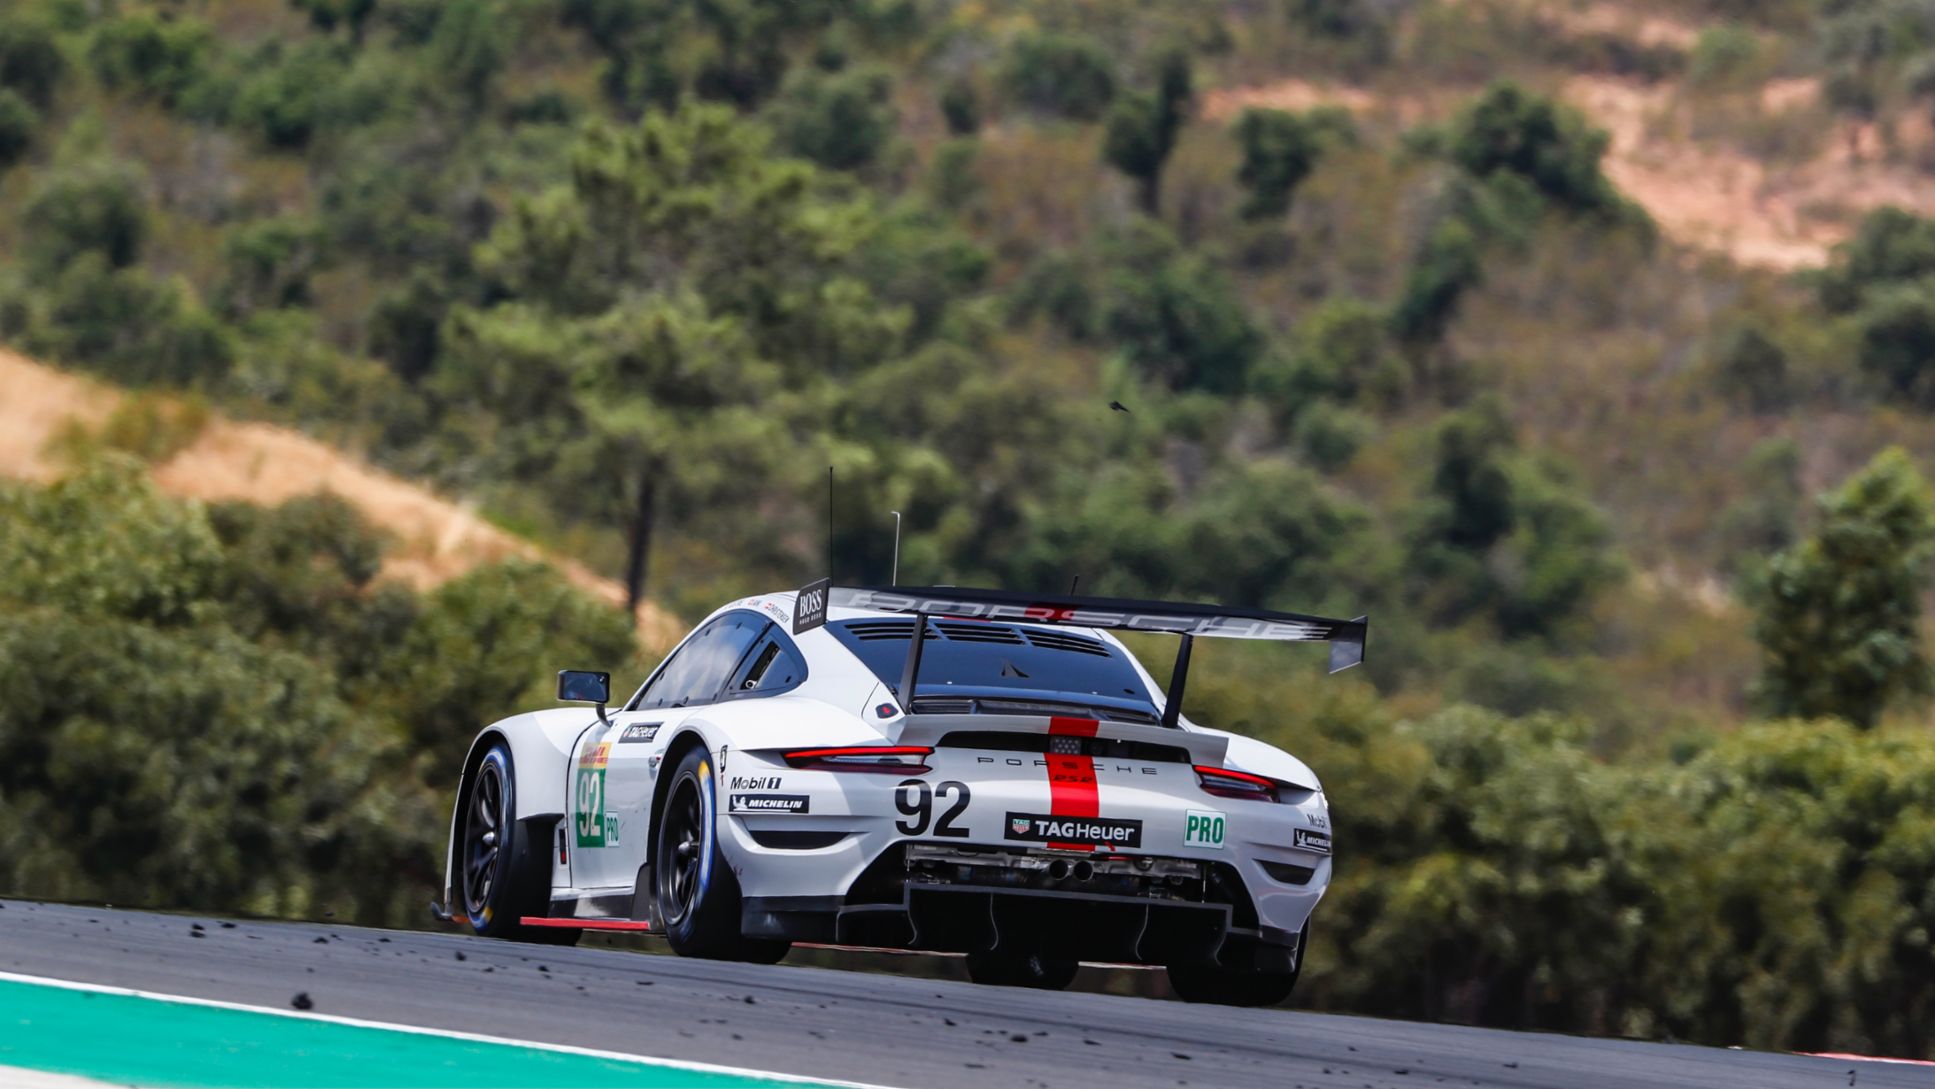 911 RSR, FIA WEC, Lauf 2, Portimão, Portugal, Rennen, 2021, Porsche AG